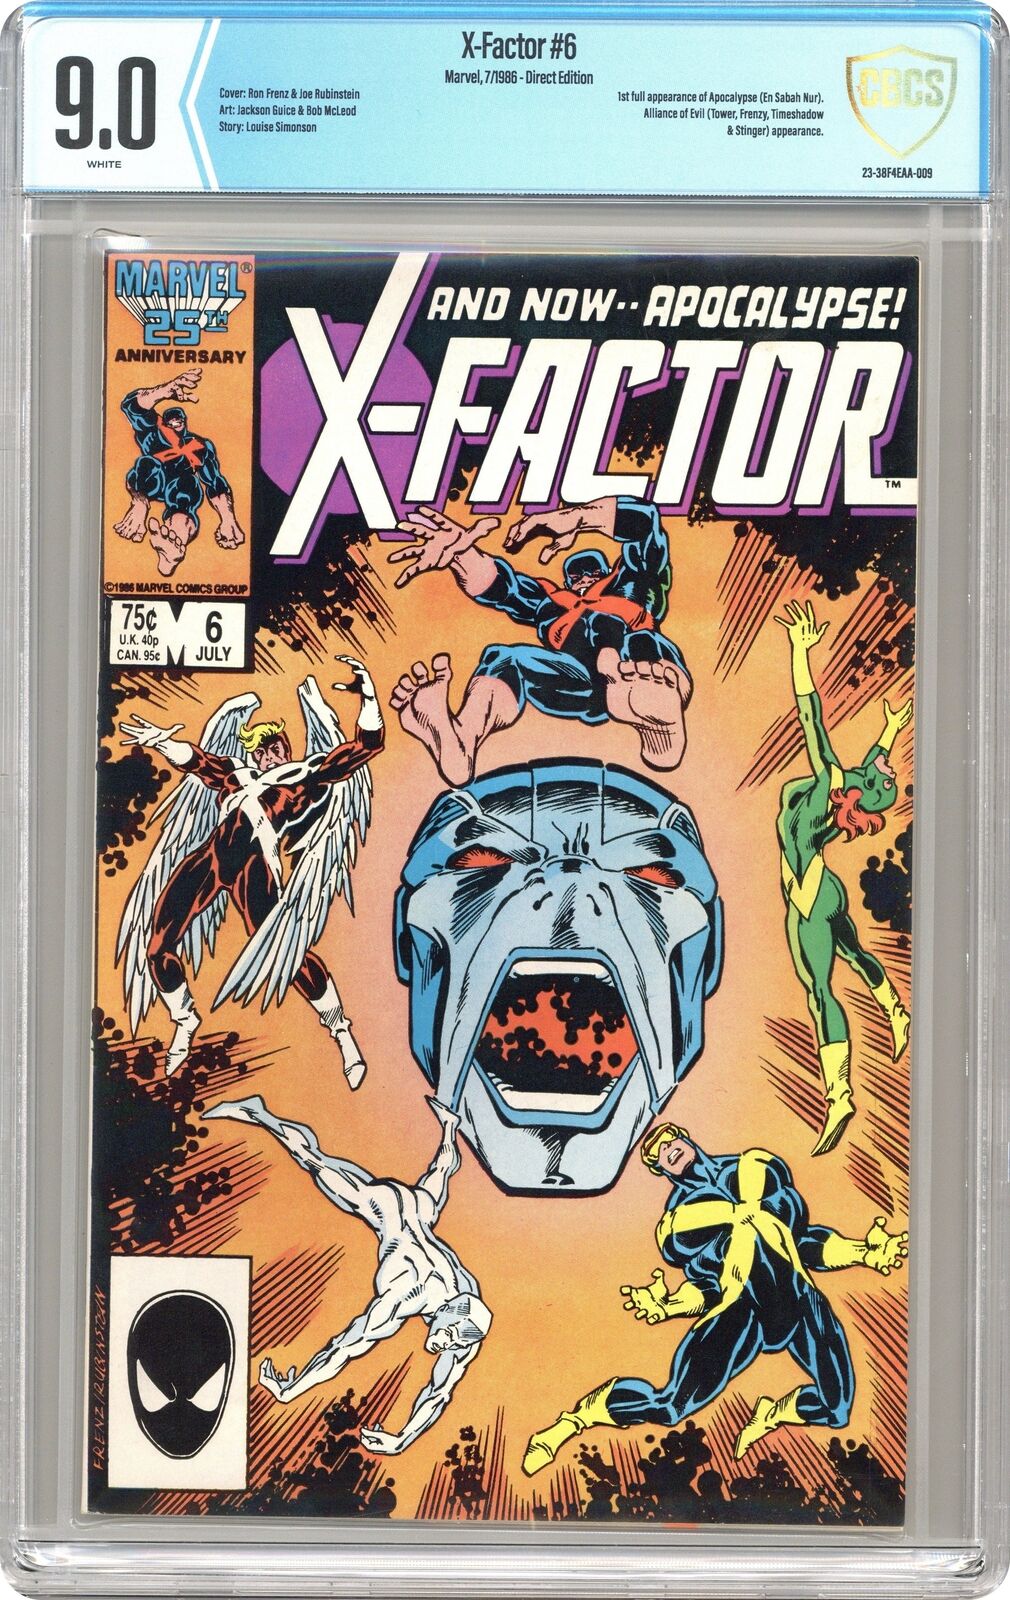 X-Factor #6D CBCS 9.0 1986 23-38F4EAA-009 1st full app. Apocalypse